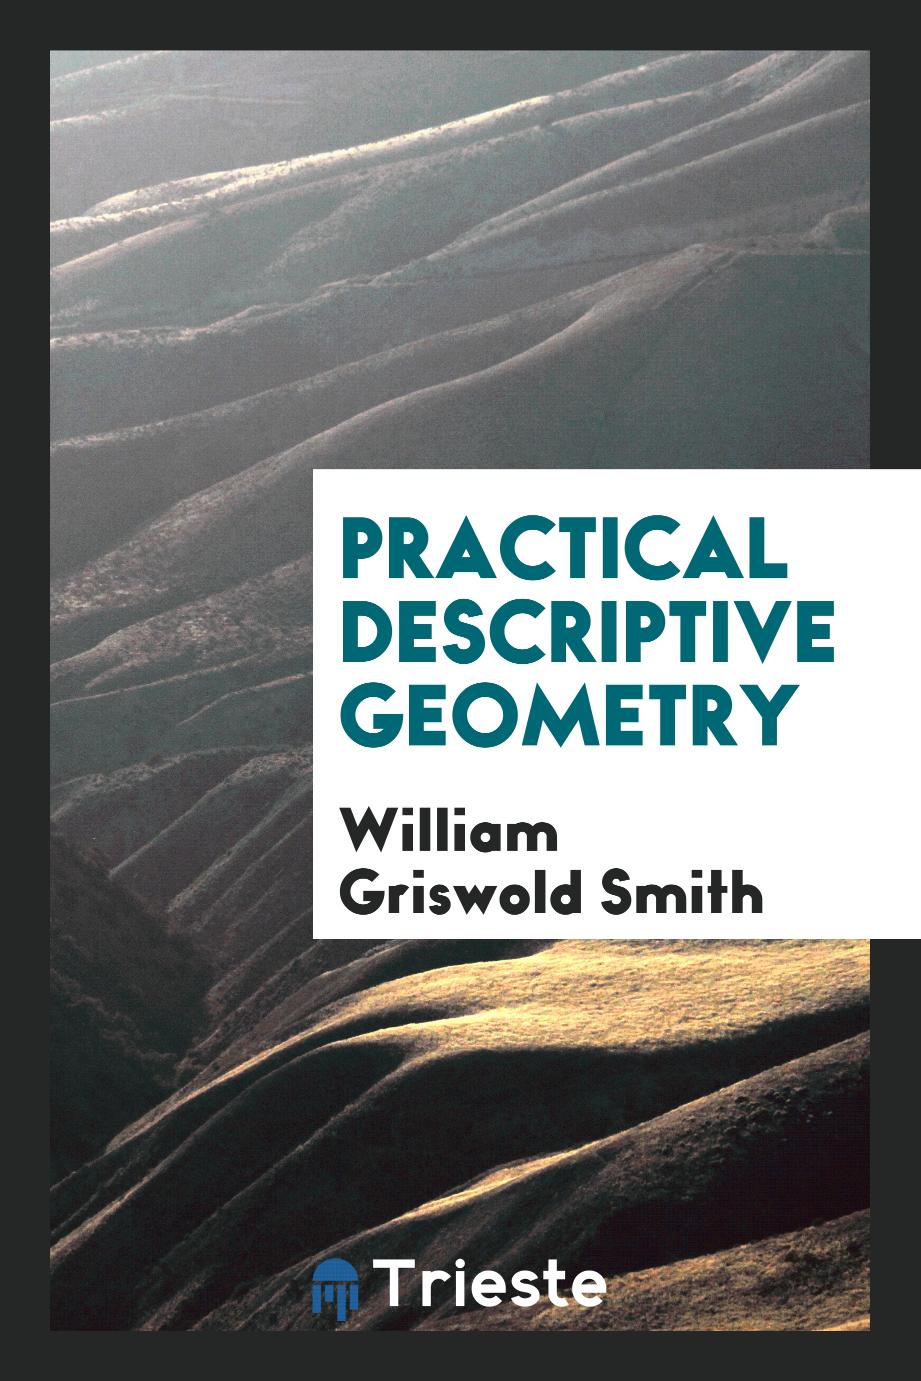 Practical descriptive geometry